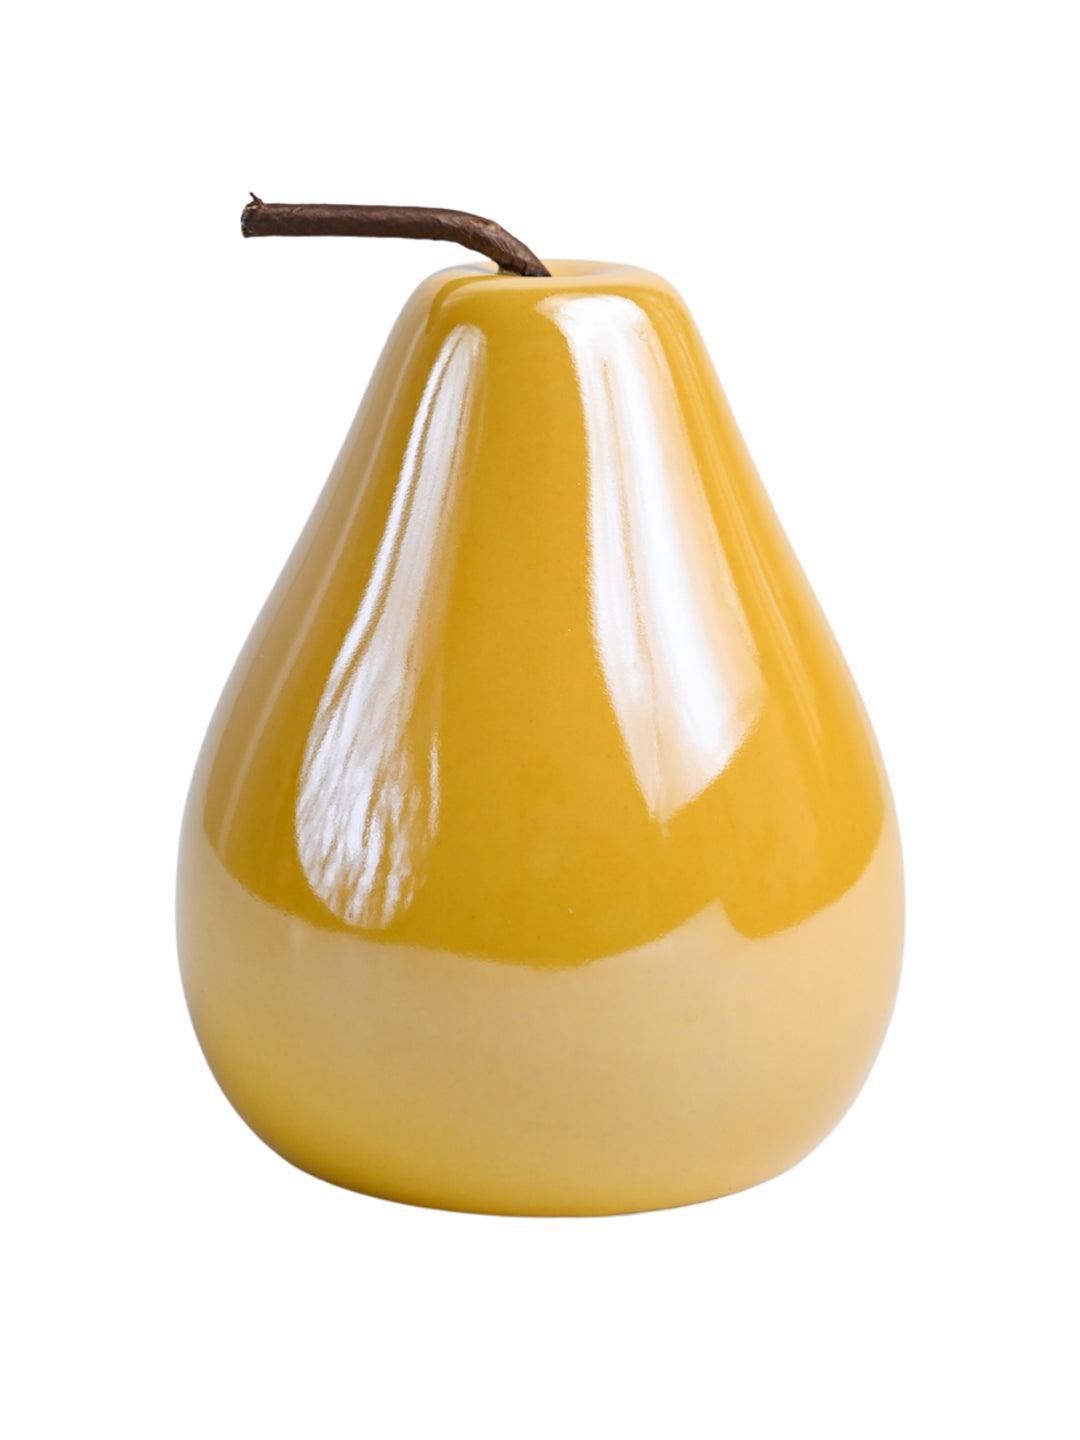 VON CASA Decorative Pear - Ceramic, Yellow - MARKET99